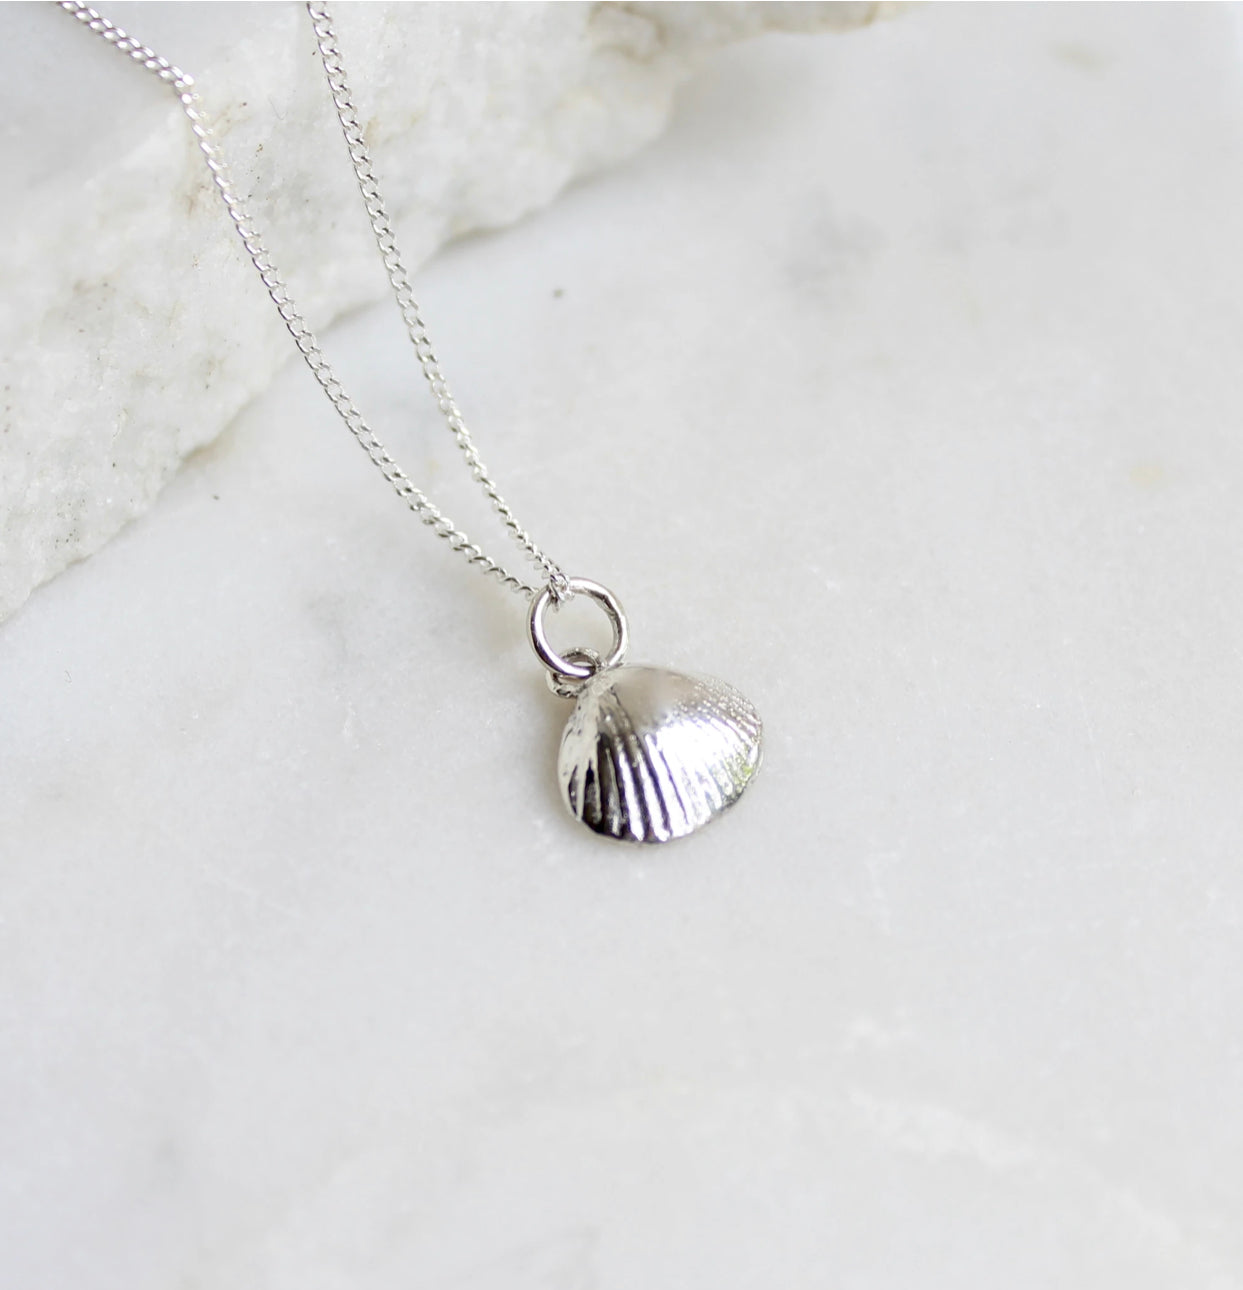 Small shell charm pendant